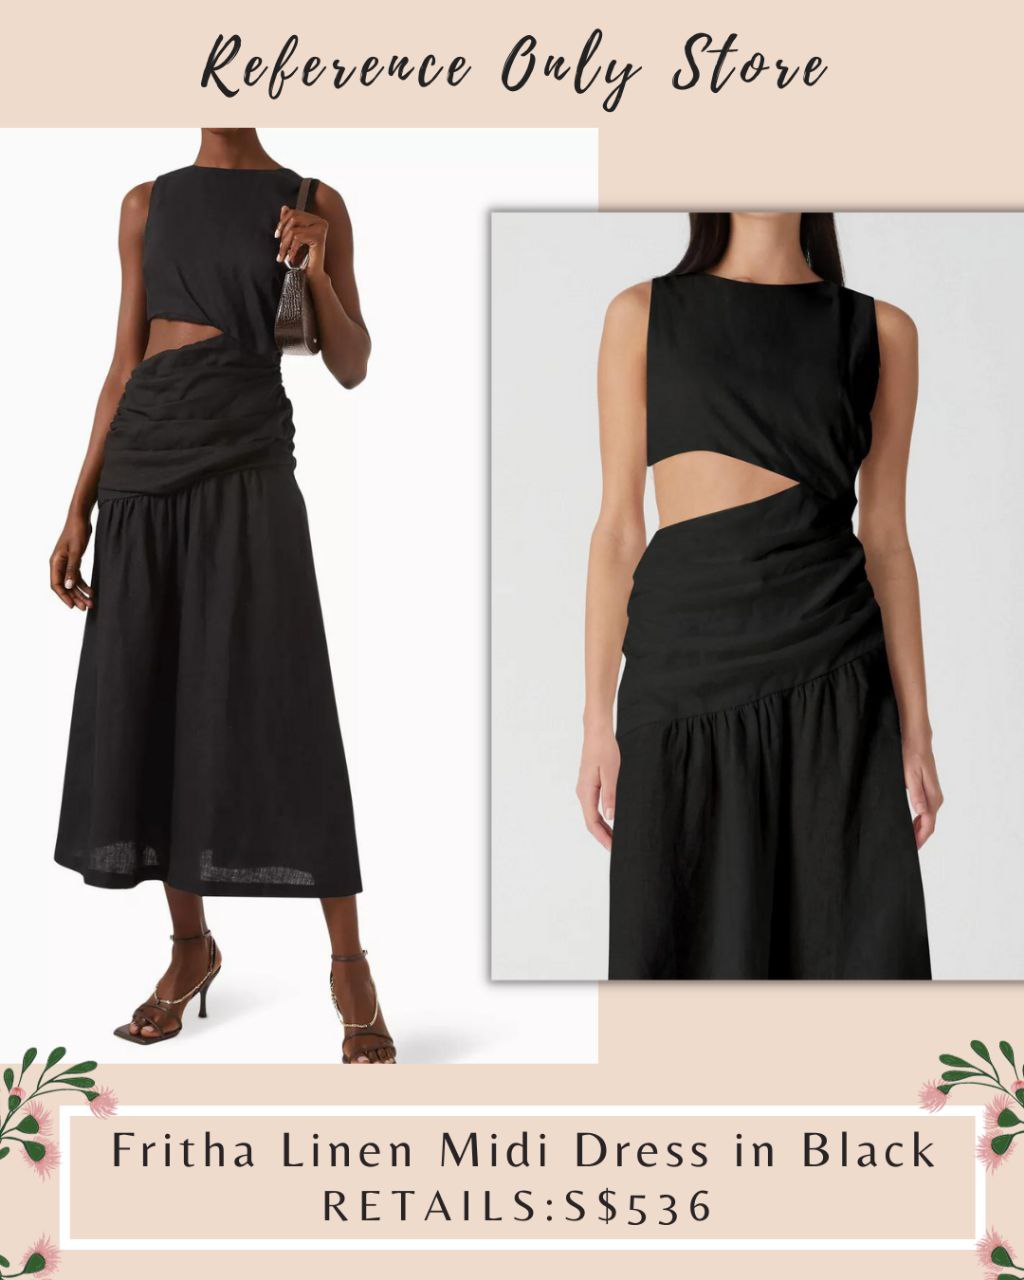 MS Fritha Linen Midi Dress in black